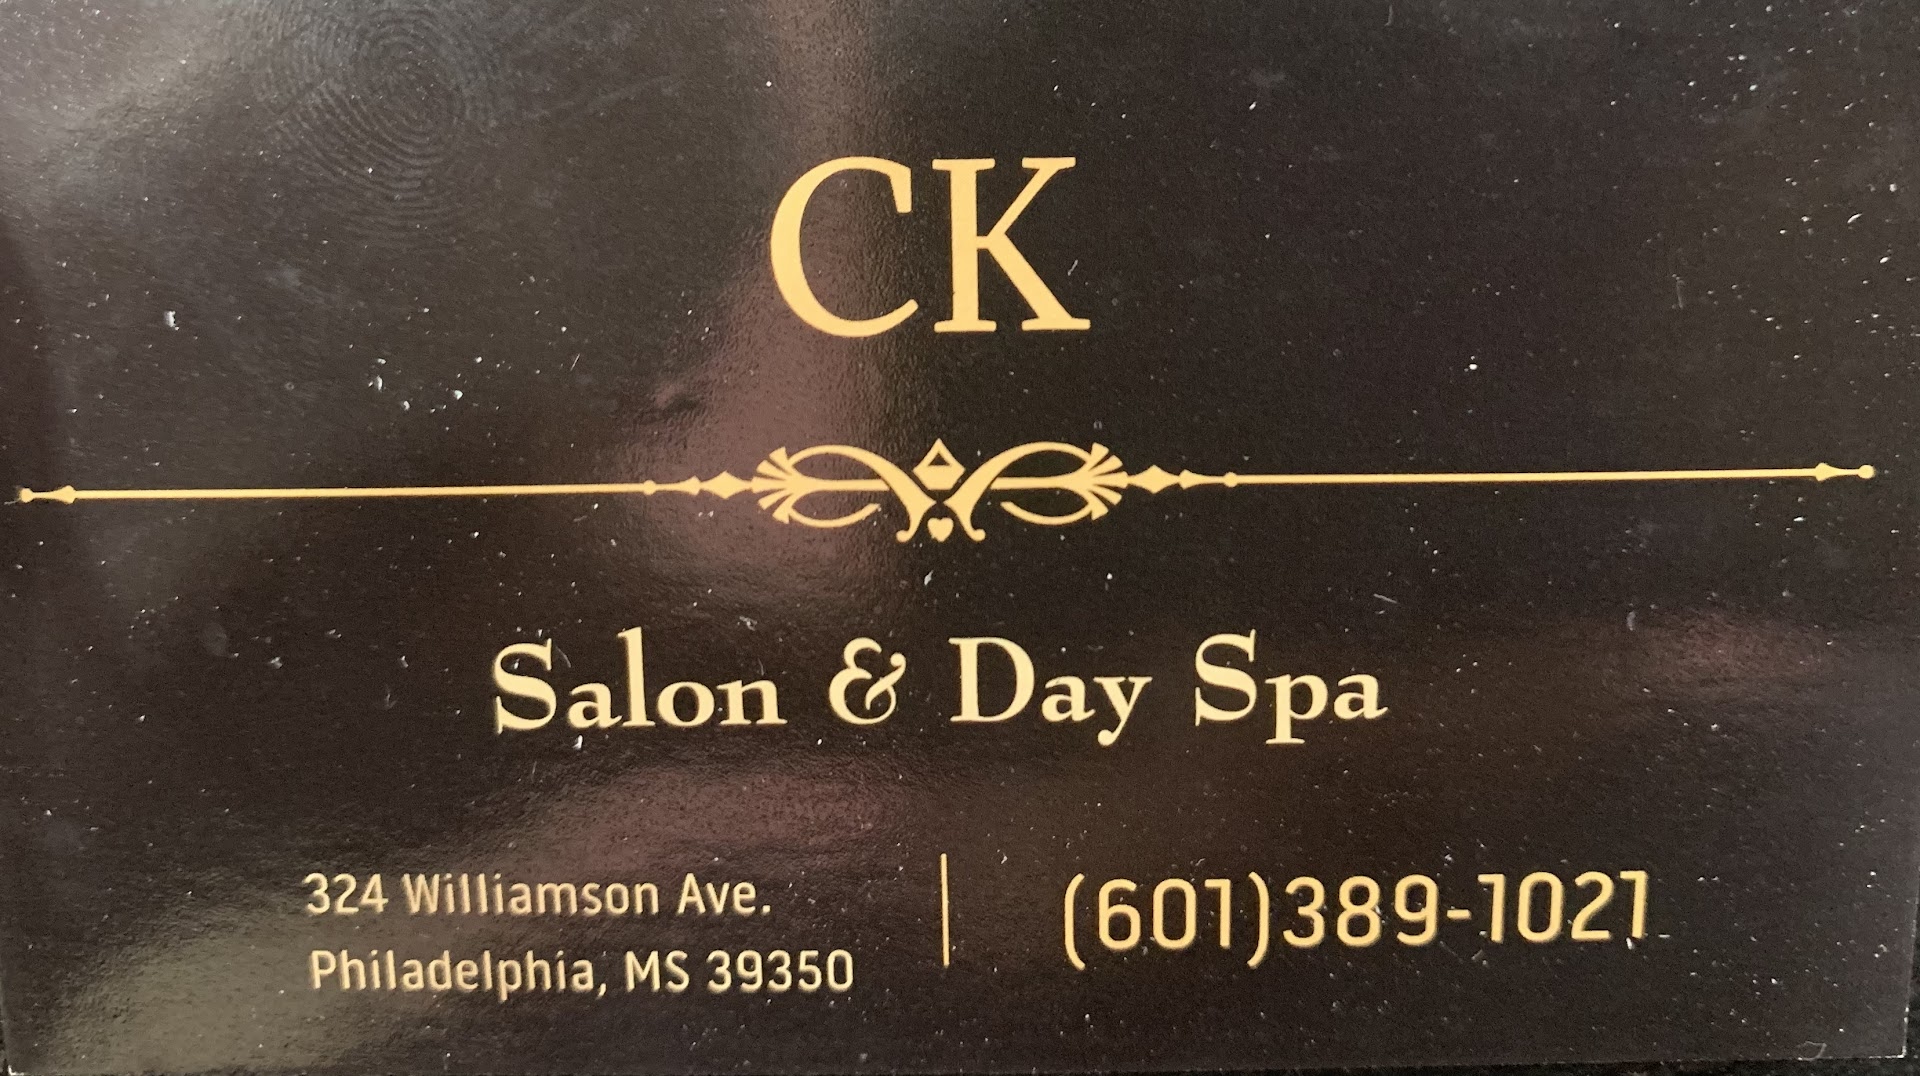 Ck Salon and Day Spa